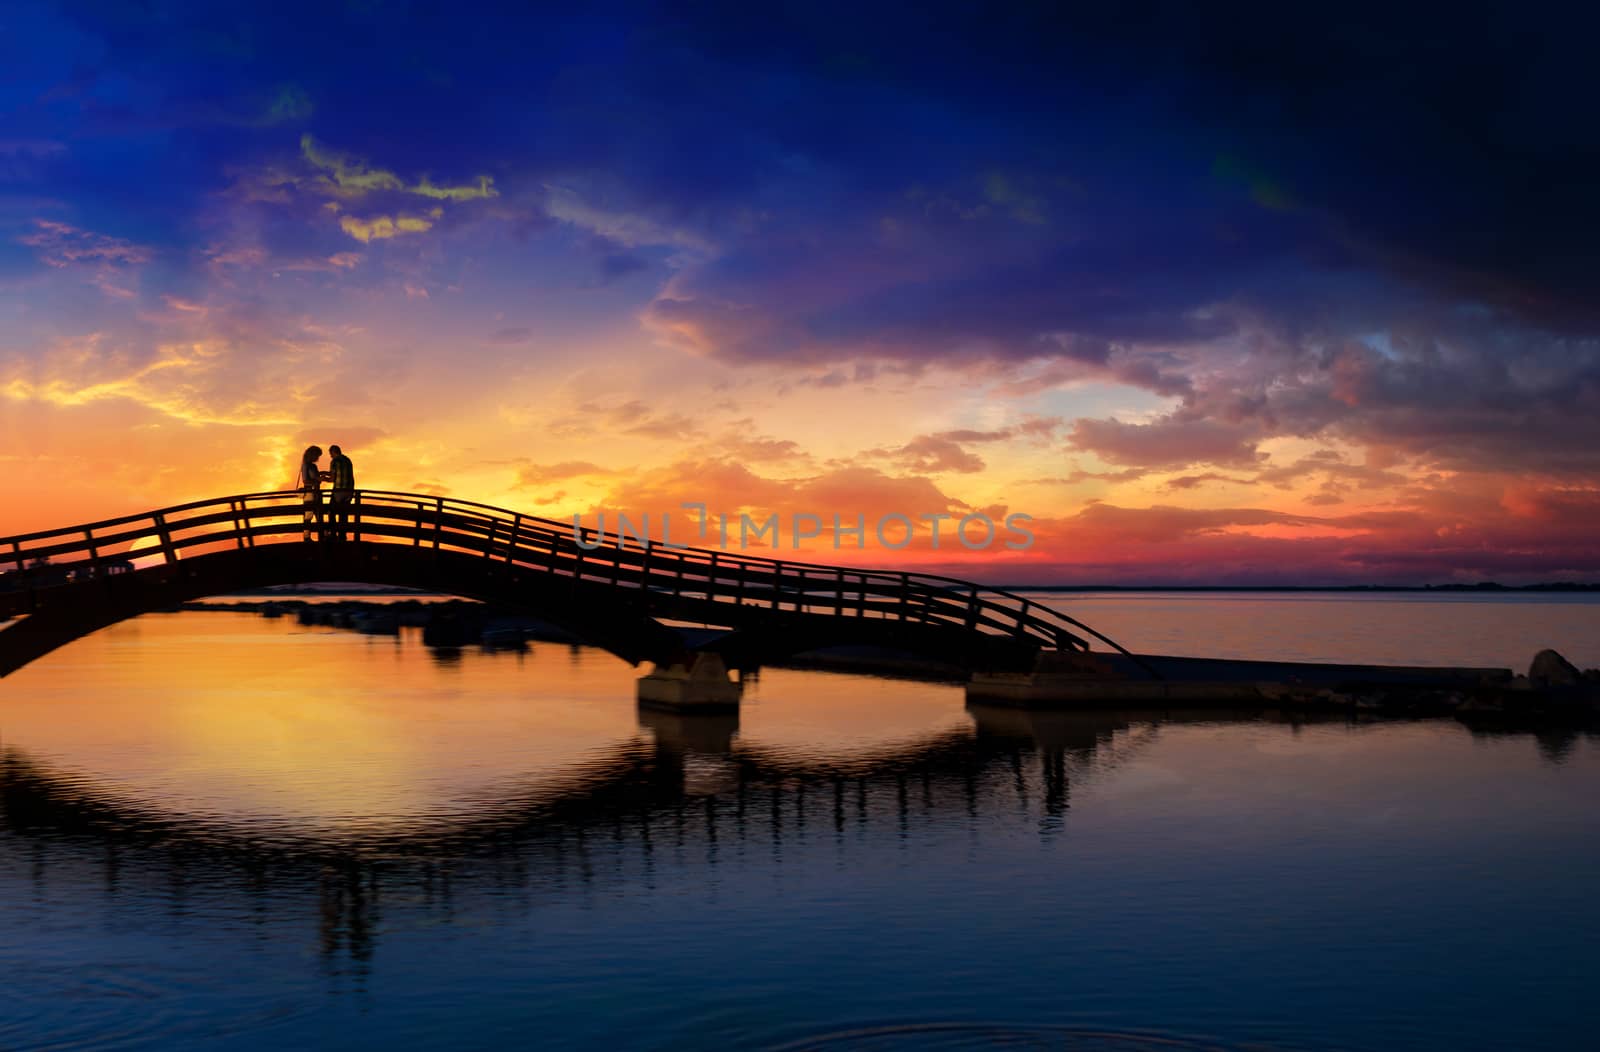 Couple enjoying the romantic sunset on the Lefkas town bridge by Netfalls